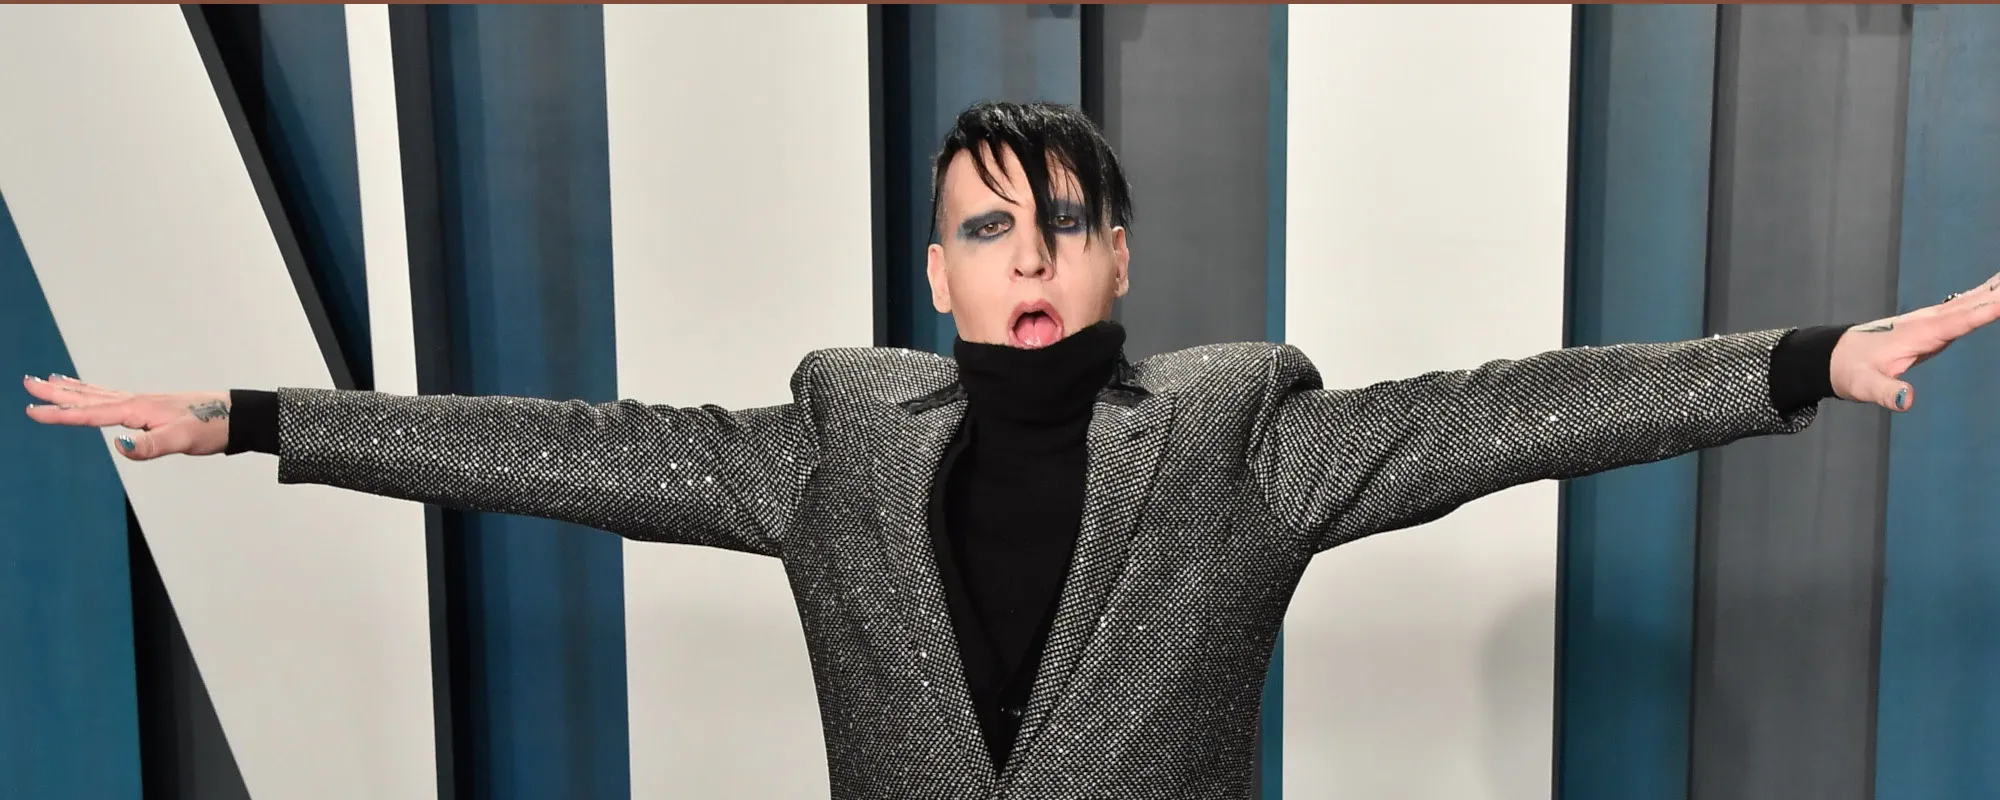 Marilyn Manson Teases New Music